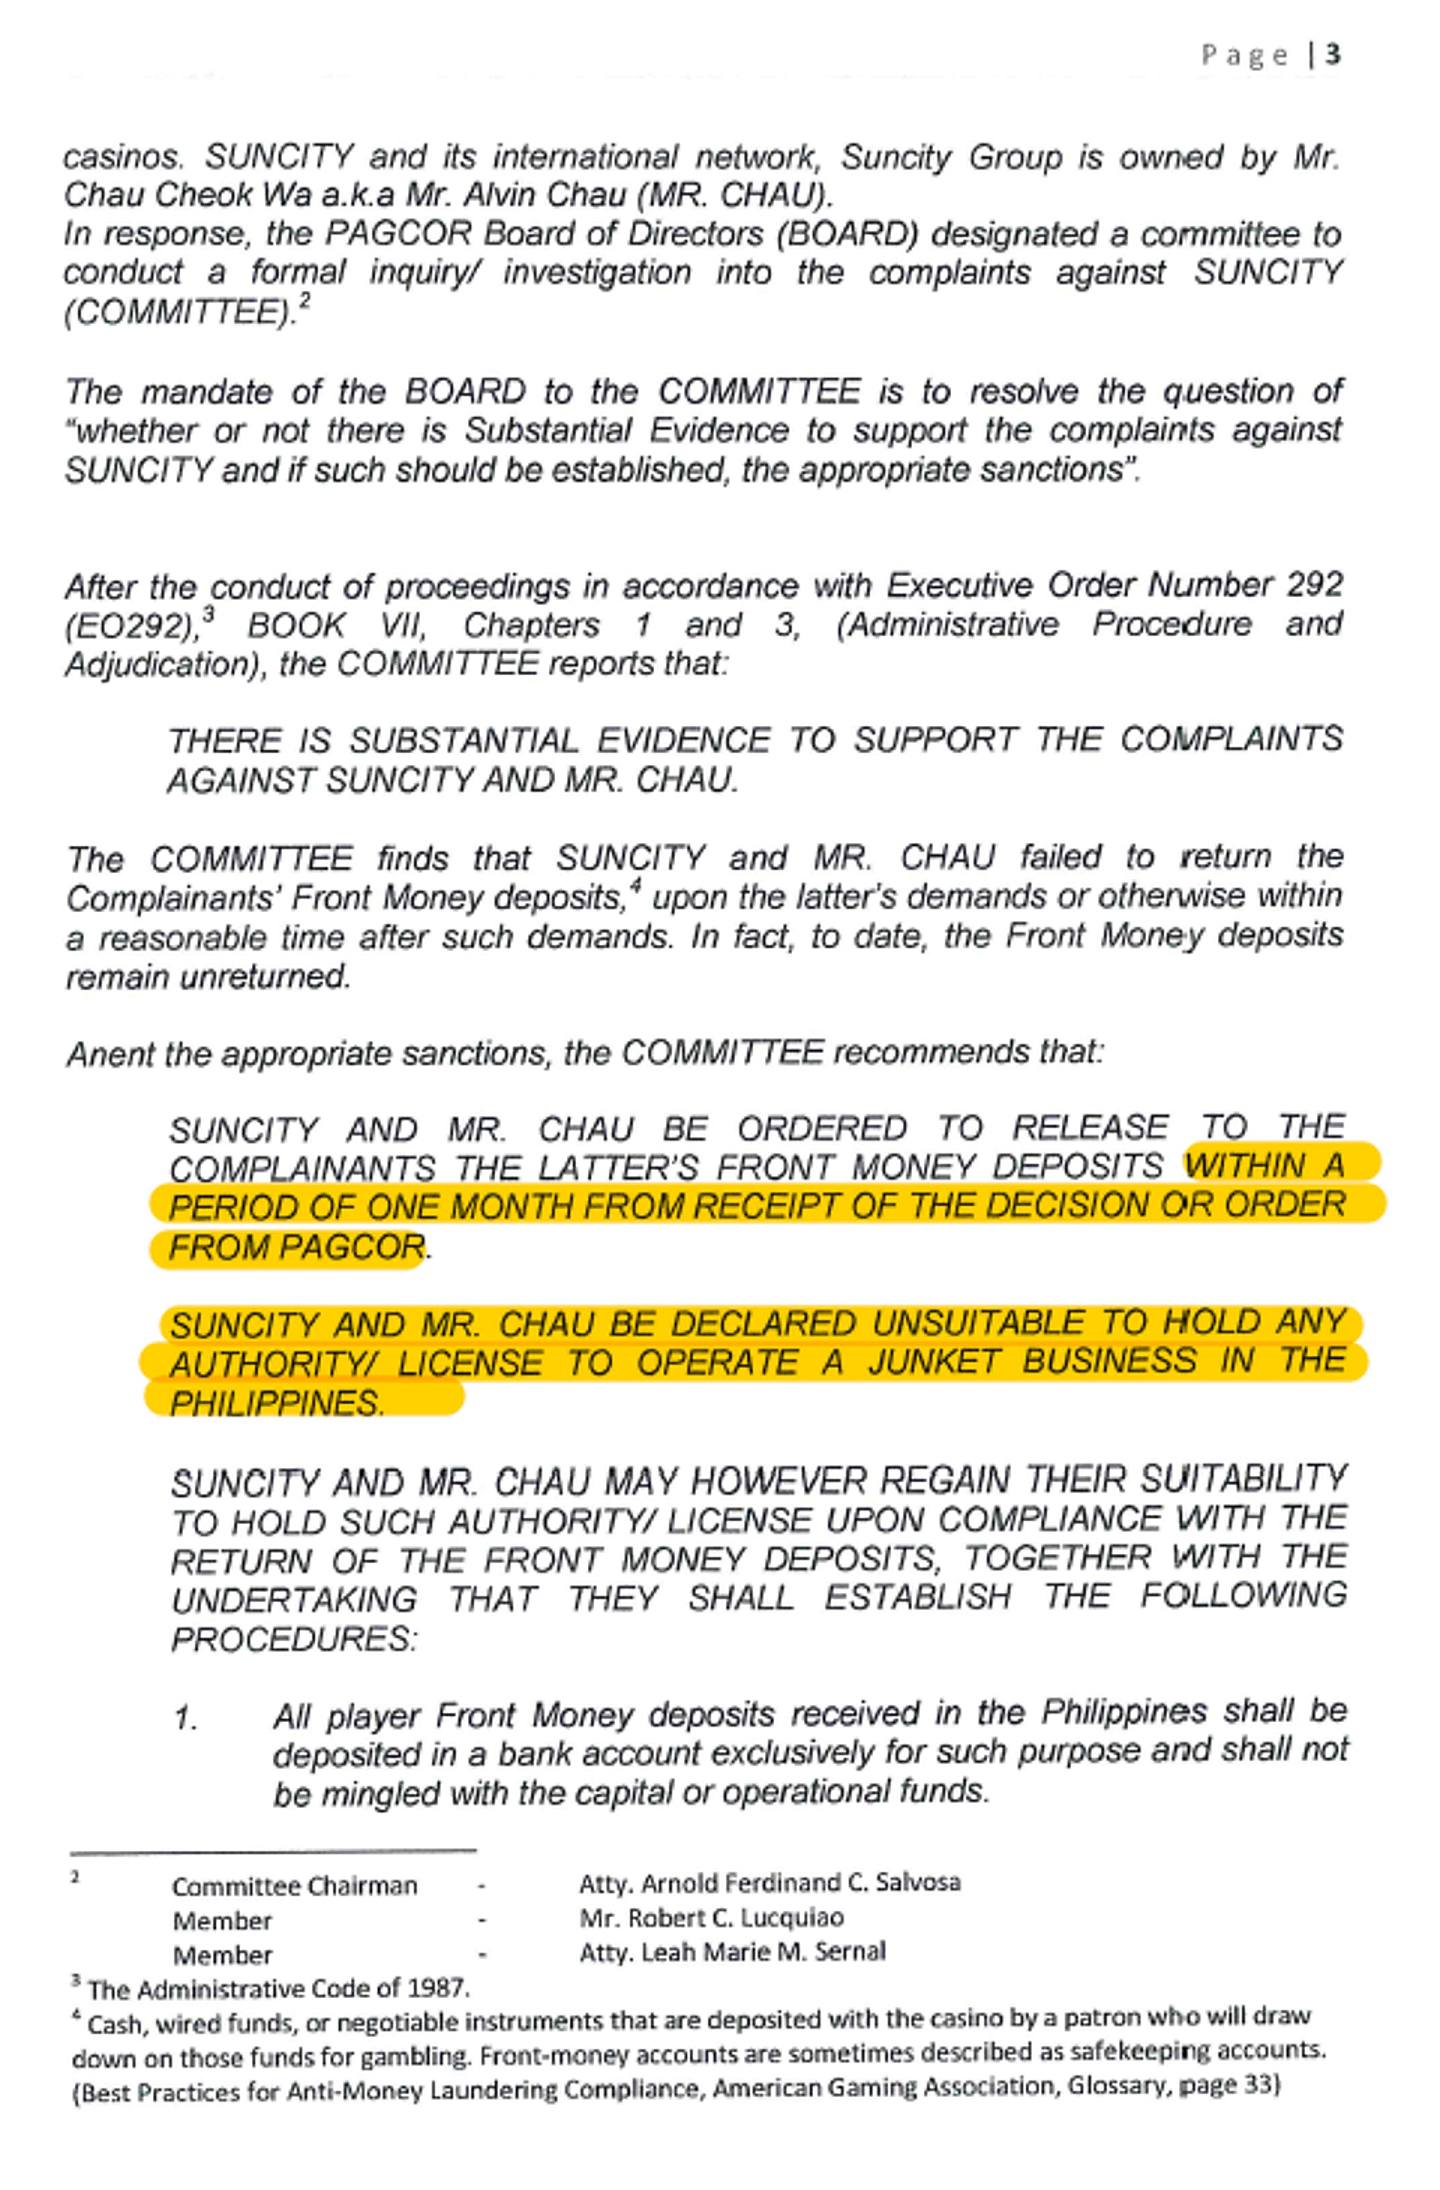 PAGCOR調查報告指出有關投訴有充足證據指控太陽城的馬尼拉公司（Suncity Group Manila）及周焯華，並要求在收到命令後的一個月限期內還款。